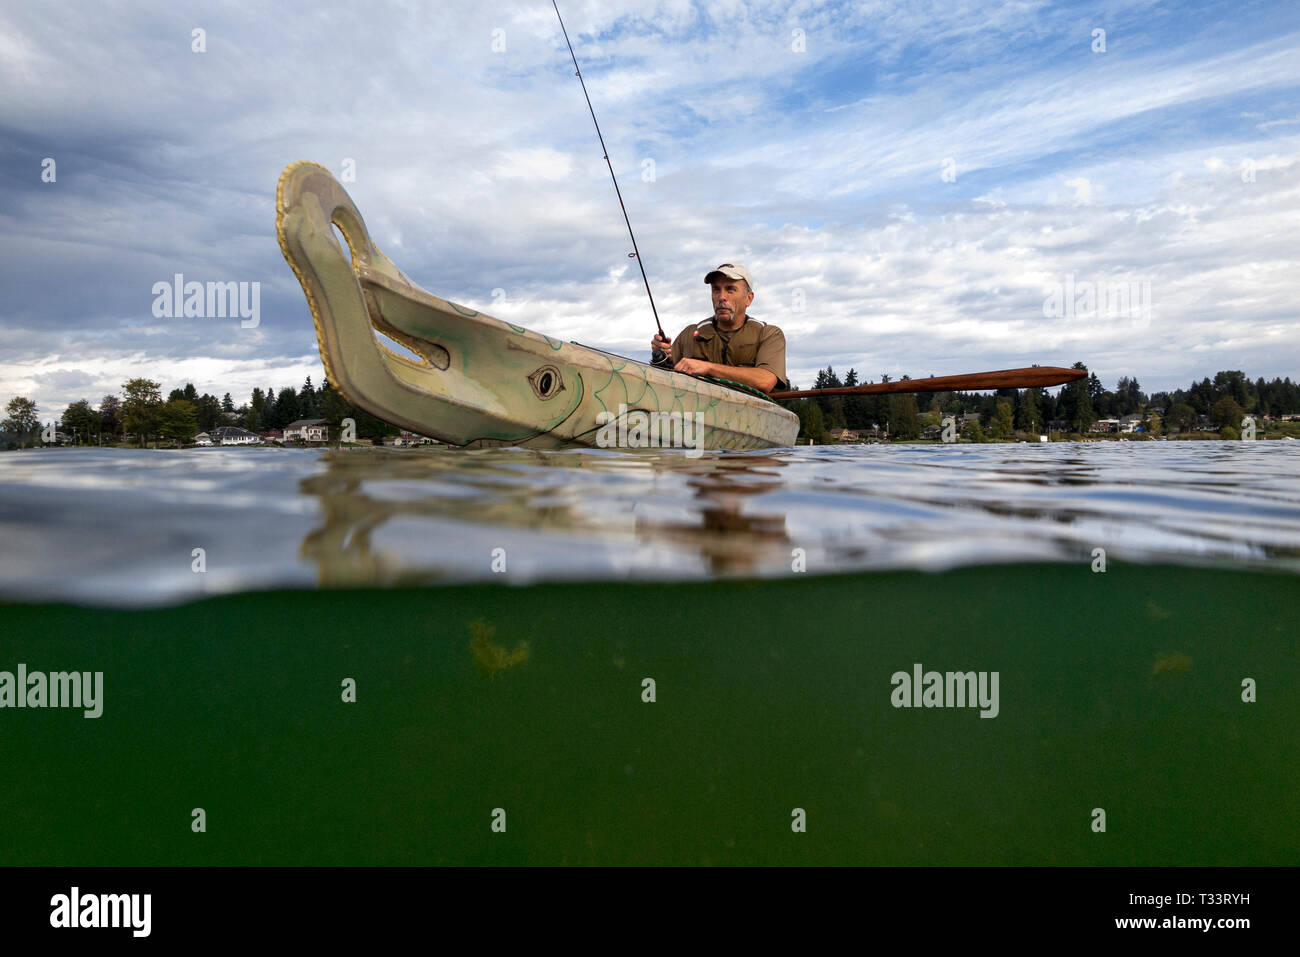 WA09968-00...WASHINGTON - Phil Russell fishing in Lake Stevens. (MR# R8) Stock Photo